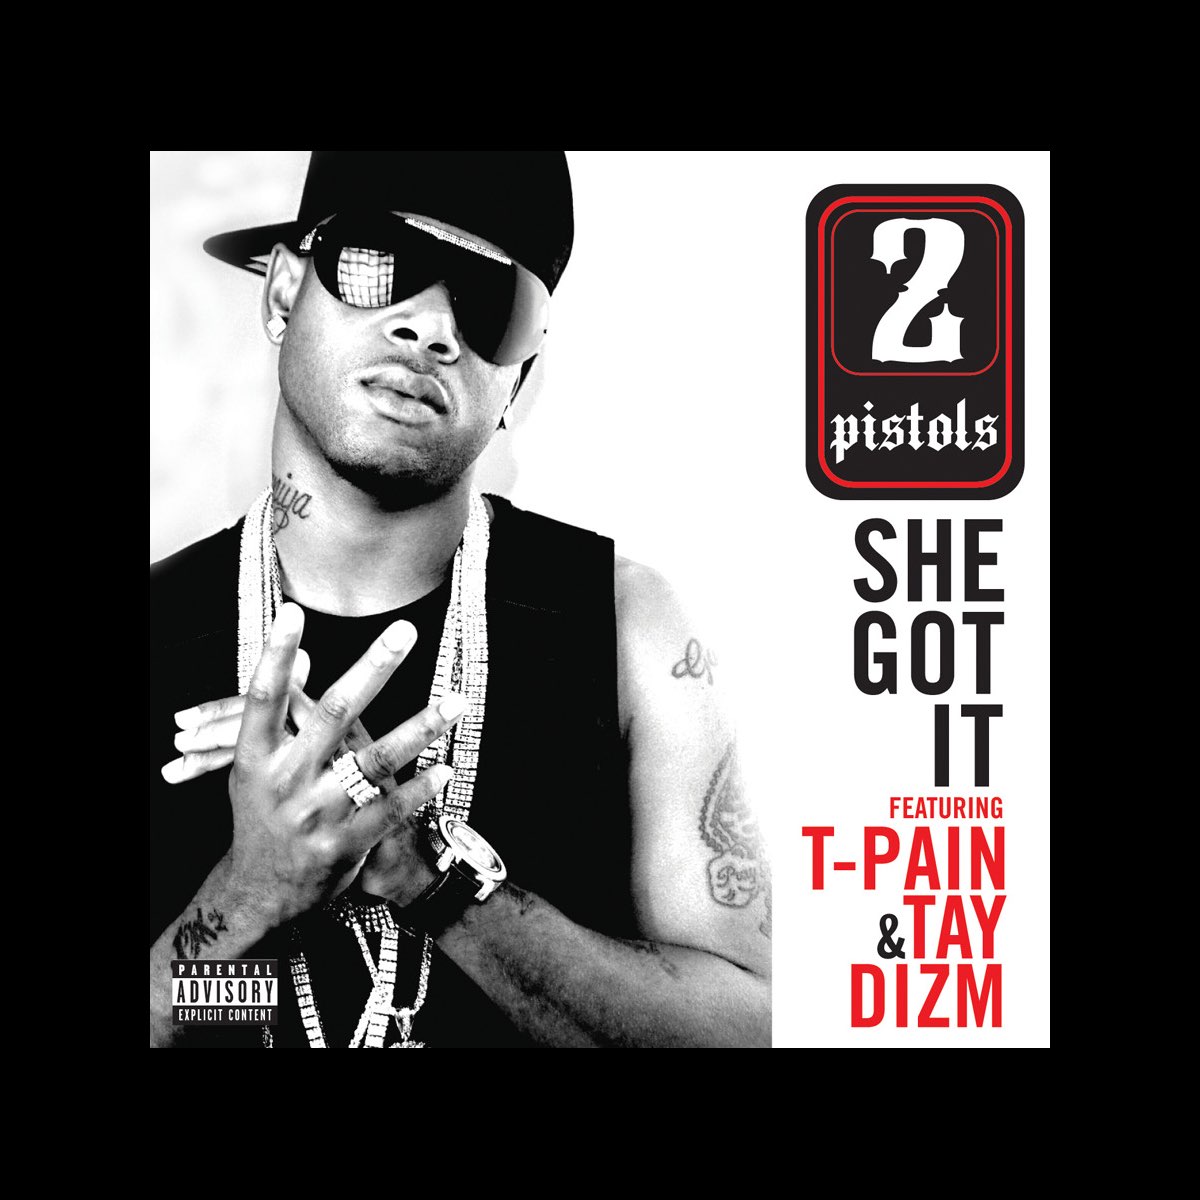 She Got It (feat. T-Pain & Tay Dizm) - Single by 2 Pistols on Apple Music